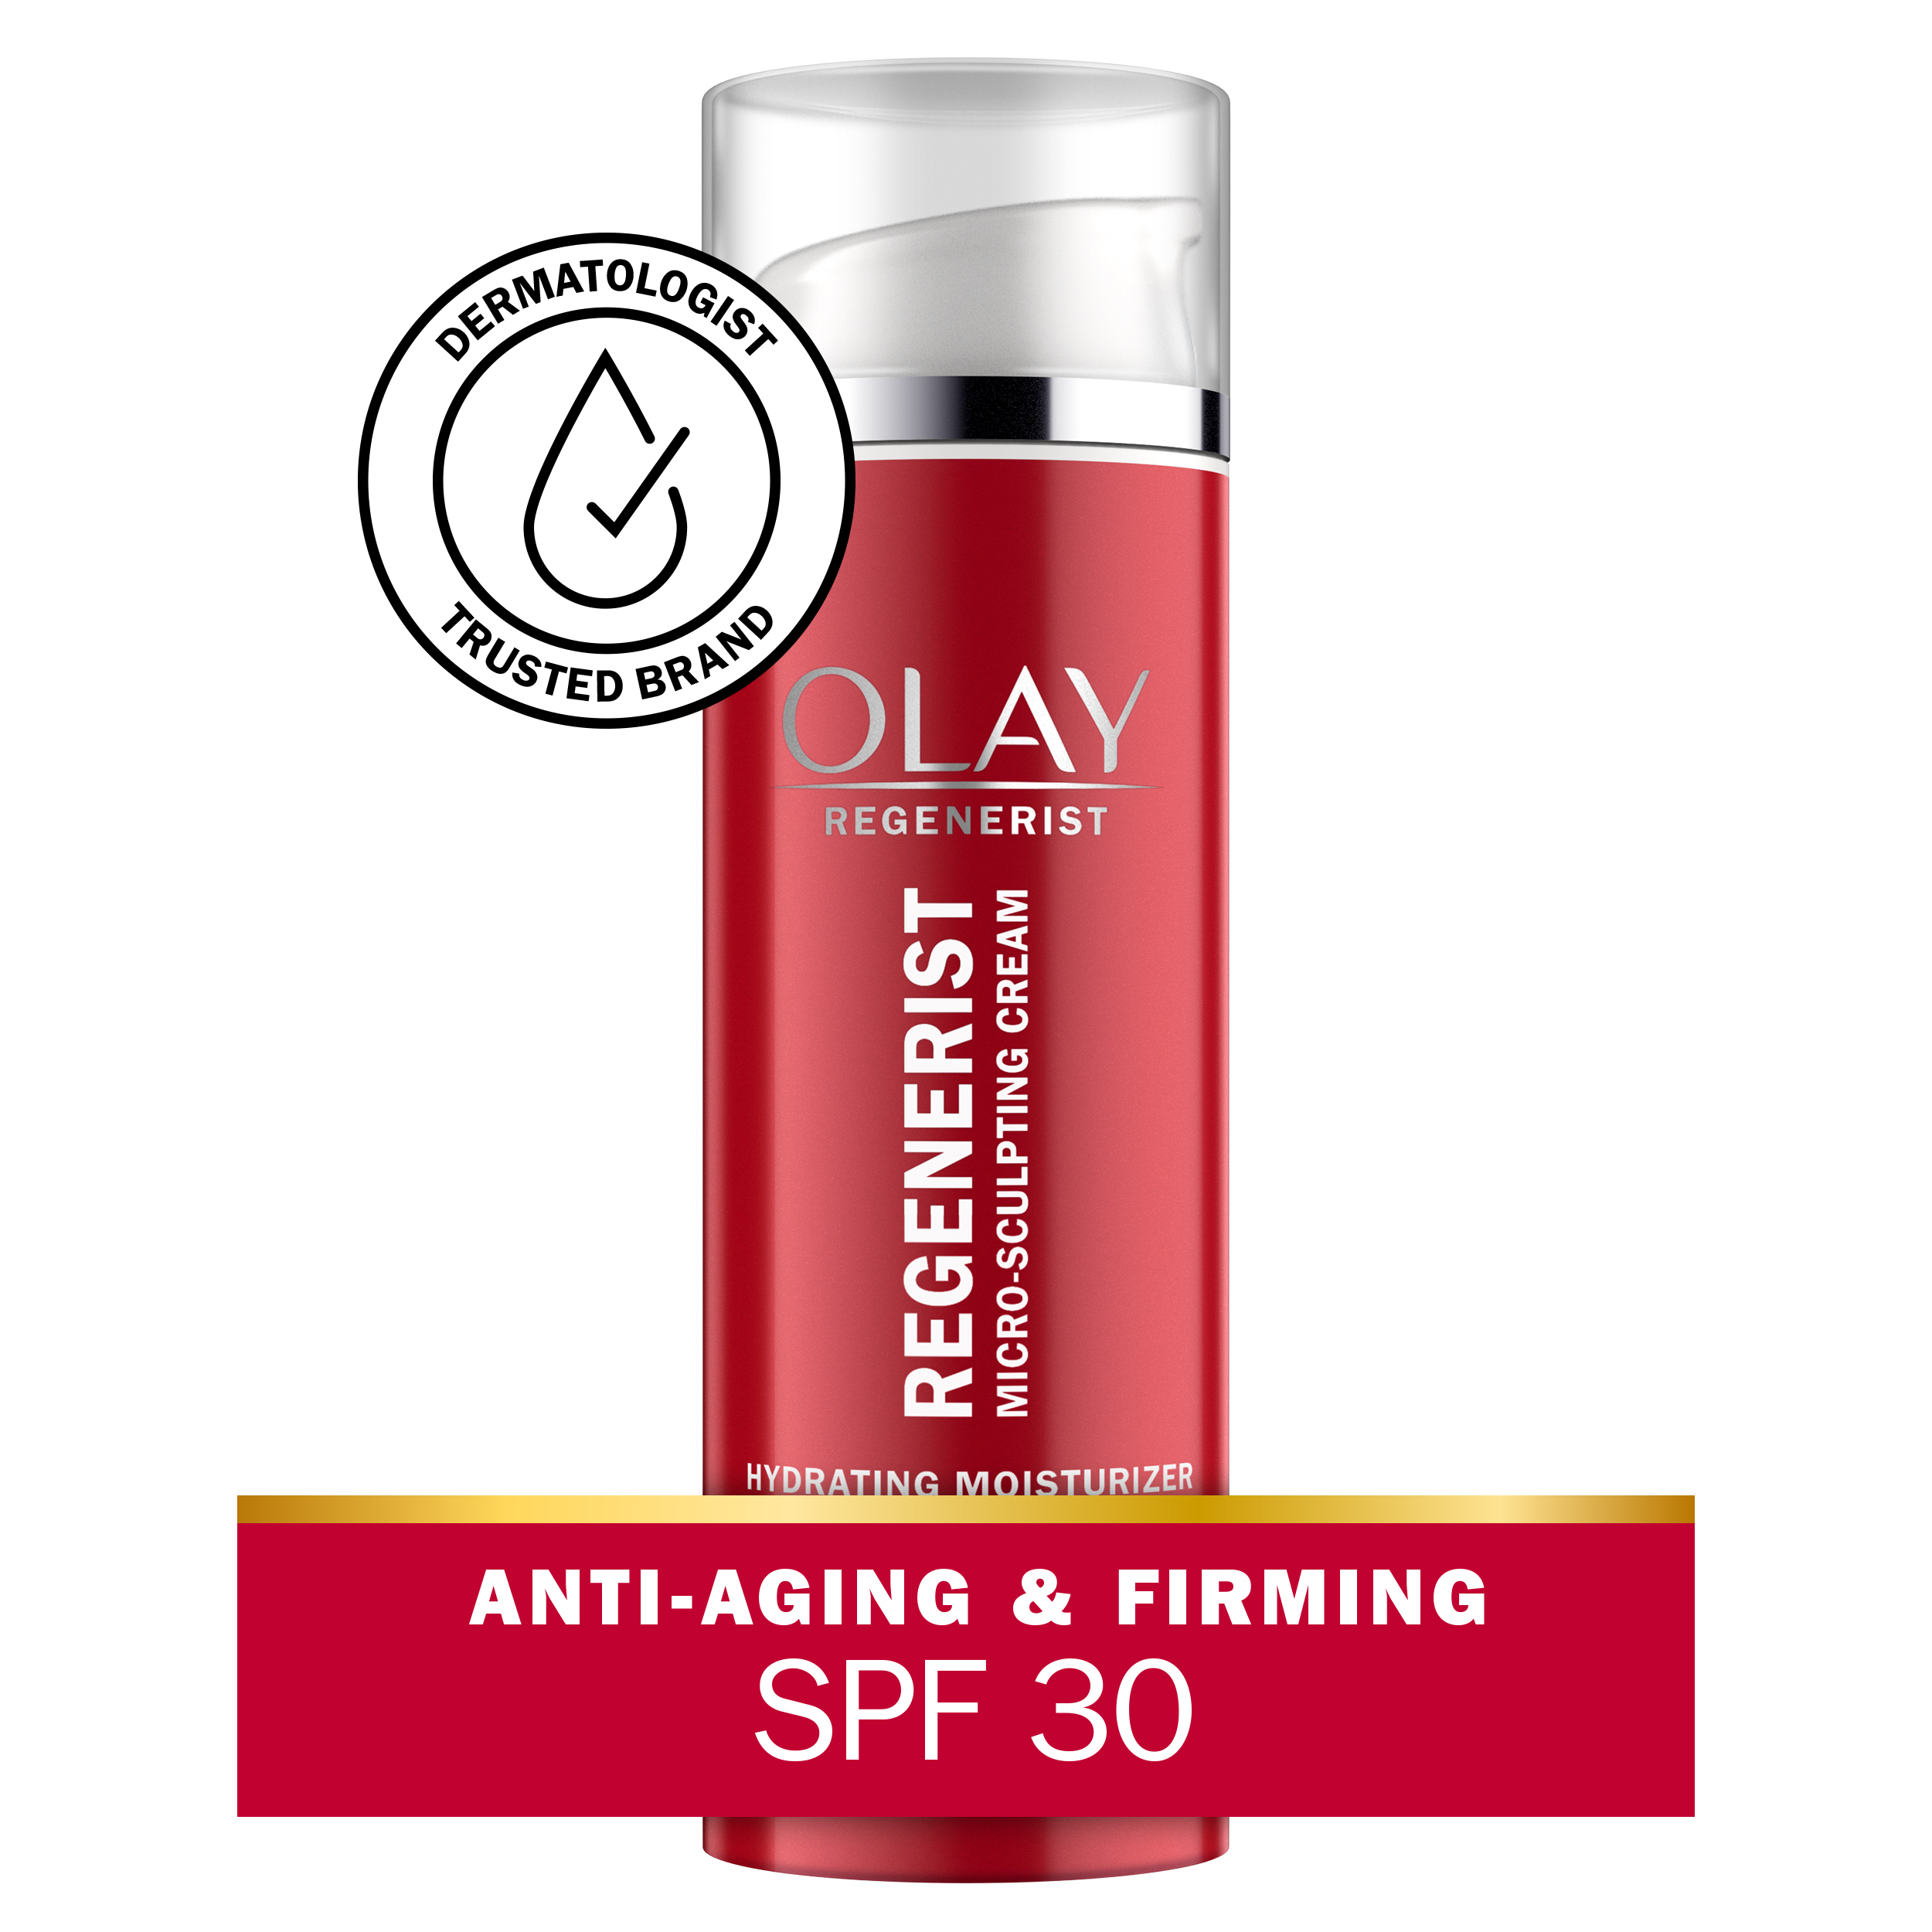 Olay Regenerist Micro-Sculpting Cream Moisturizer, SPF 30 Sun Protection for All Skin Types, 1.7 oz - image 1 of 11